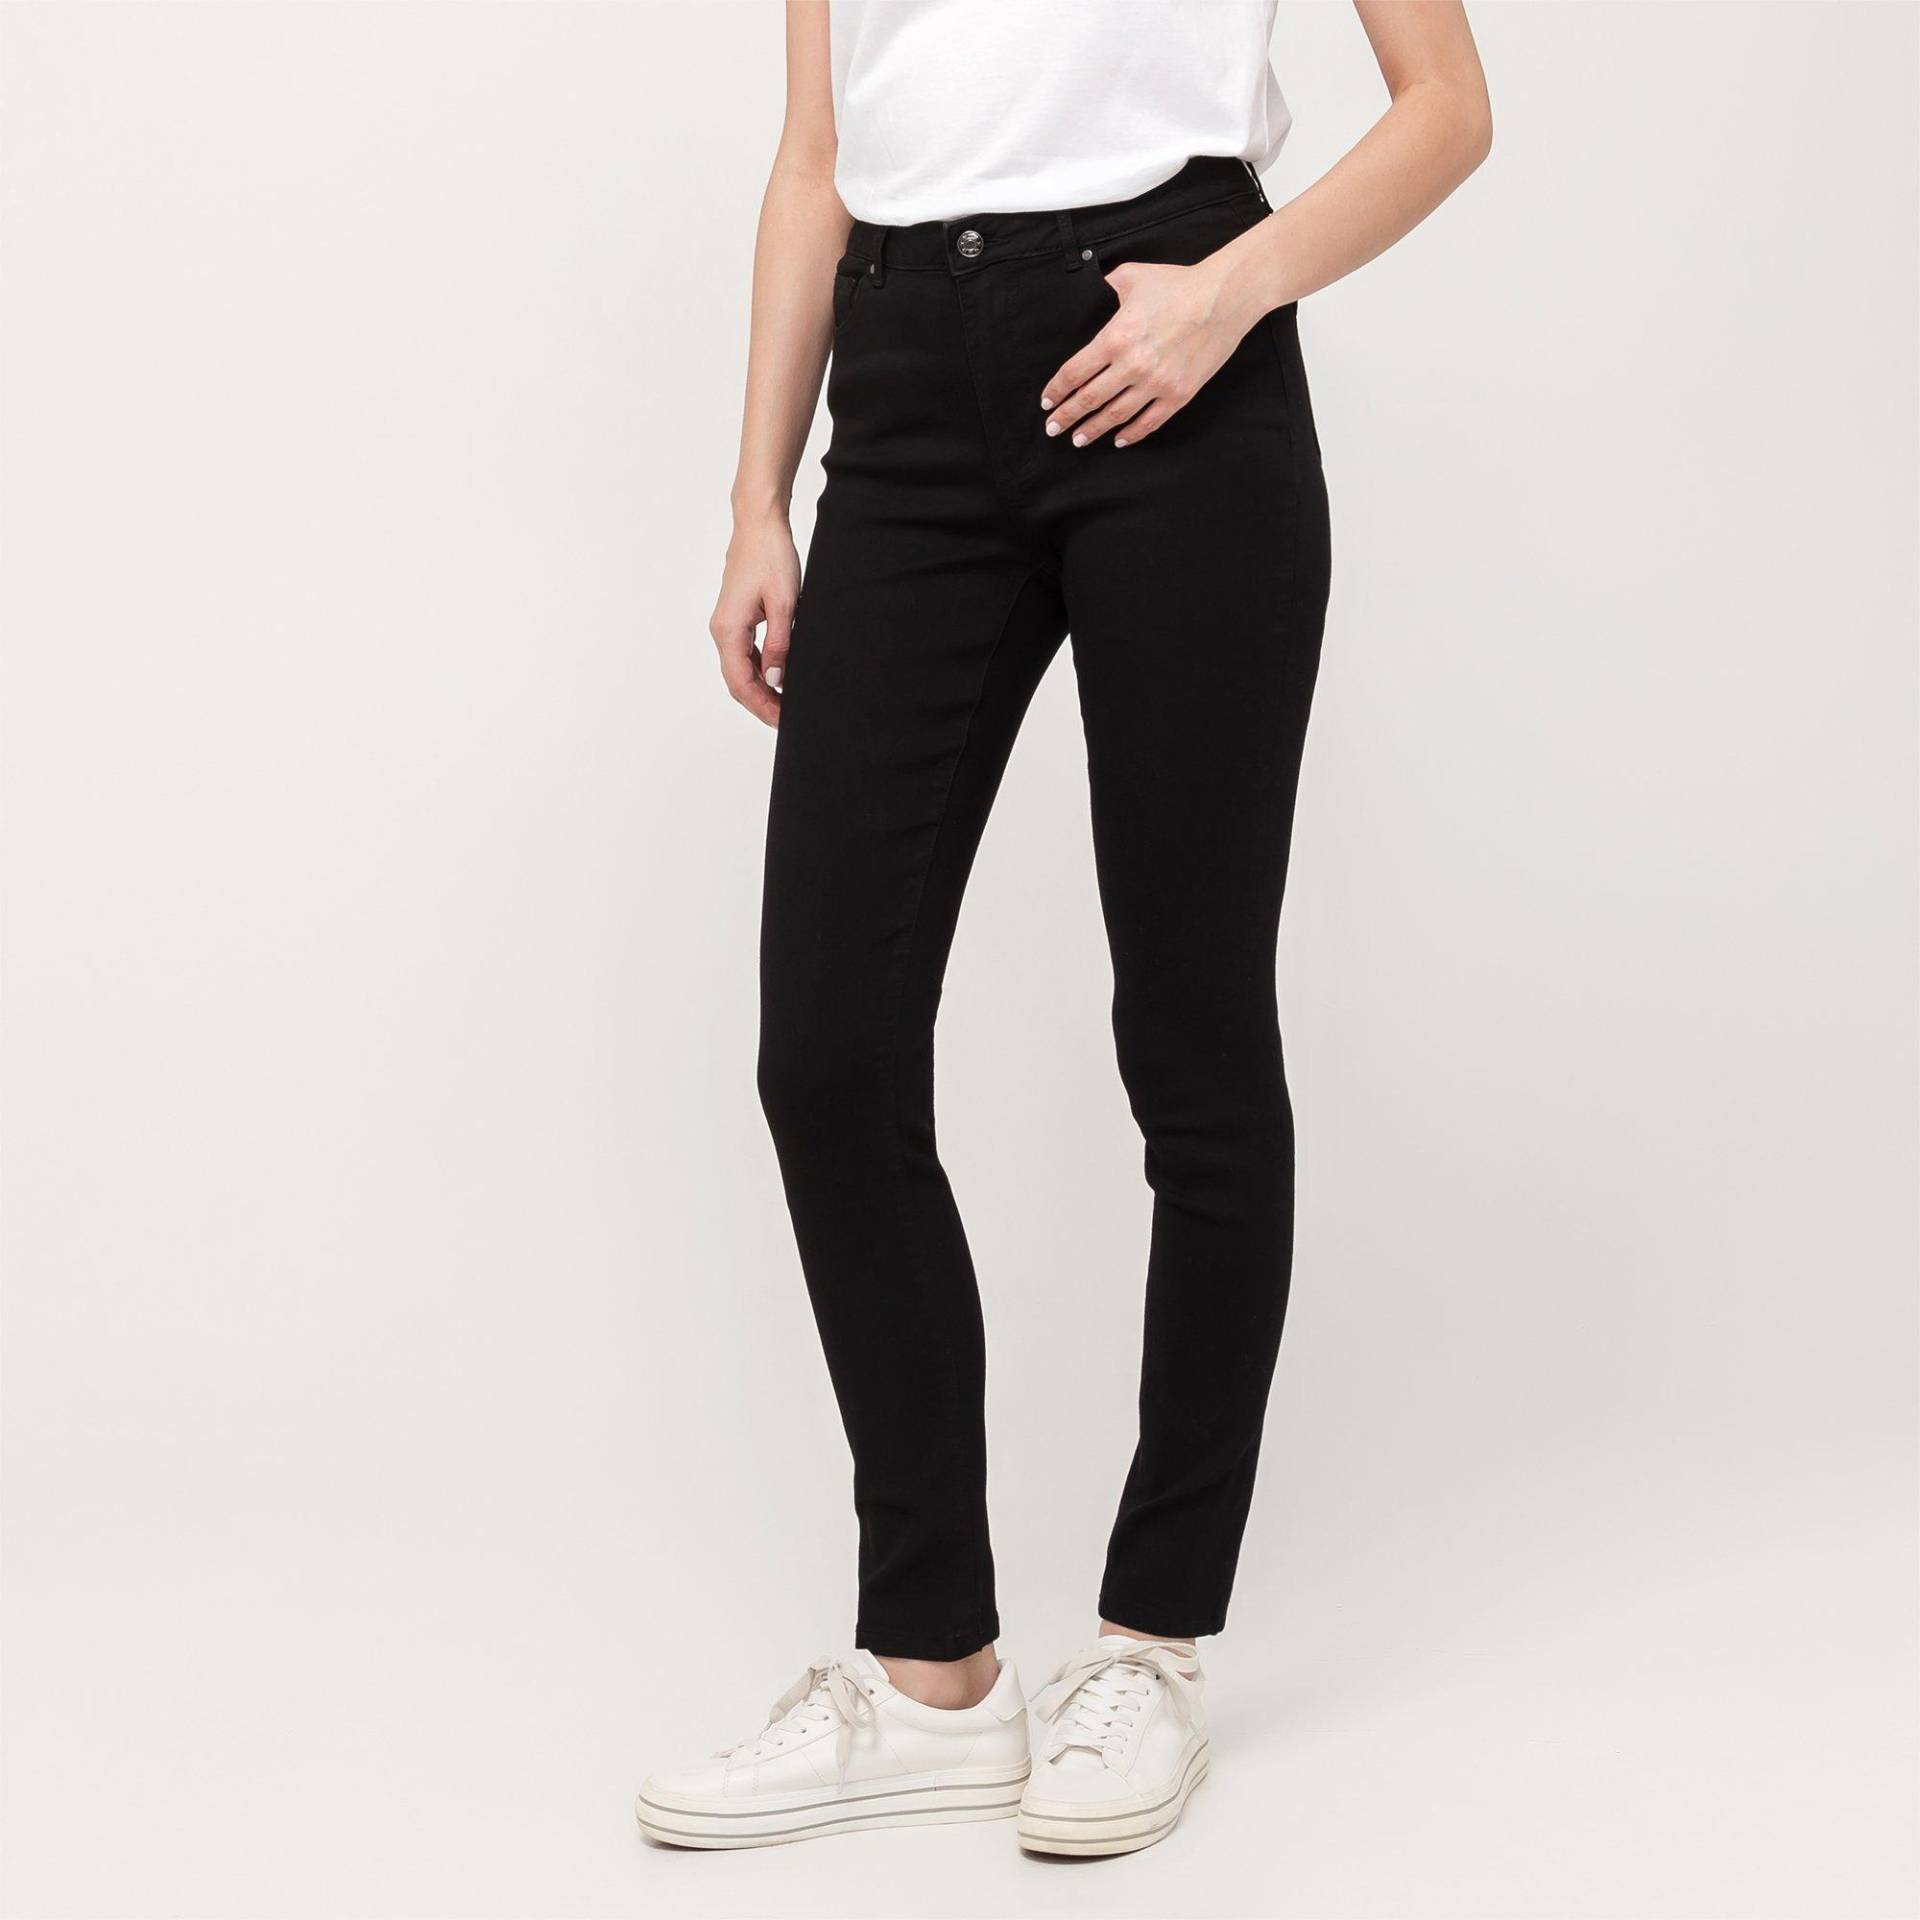 Jeans, Slim Fit Damen Black L32/W42 von Manor Woman